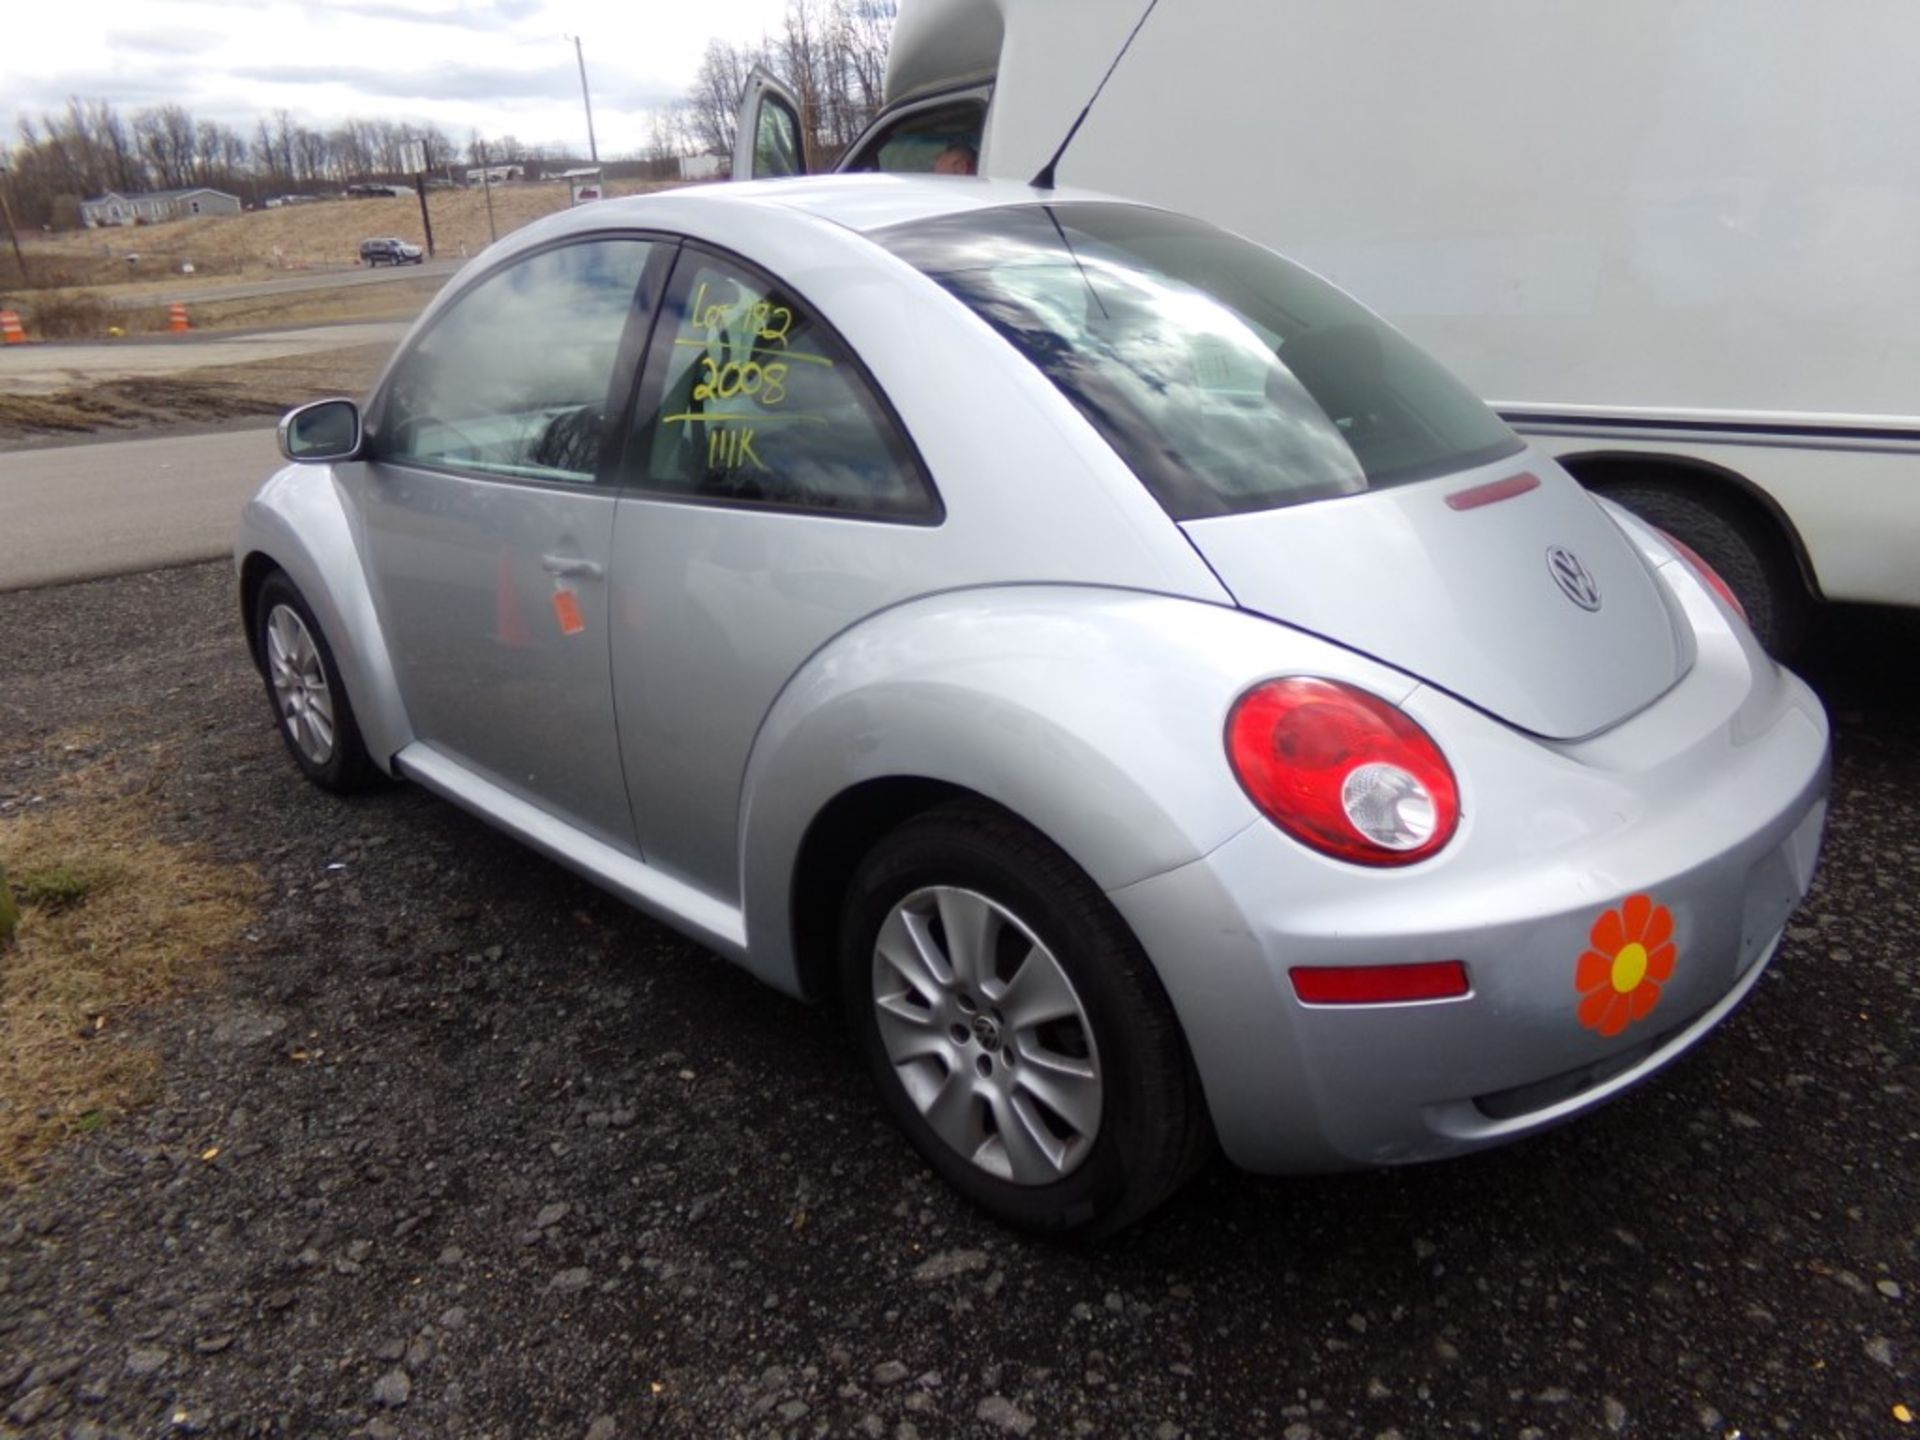 2008 Volkswagen Beetle Coupe SE, Silver, 111,578 Mi., Leather, Sunroof, Vin # 3VWRG31C08M501604, - Image 4 of 13